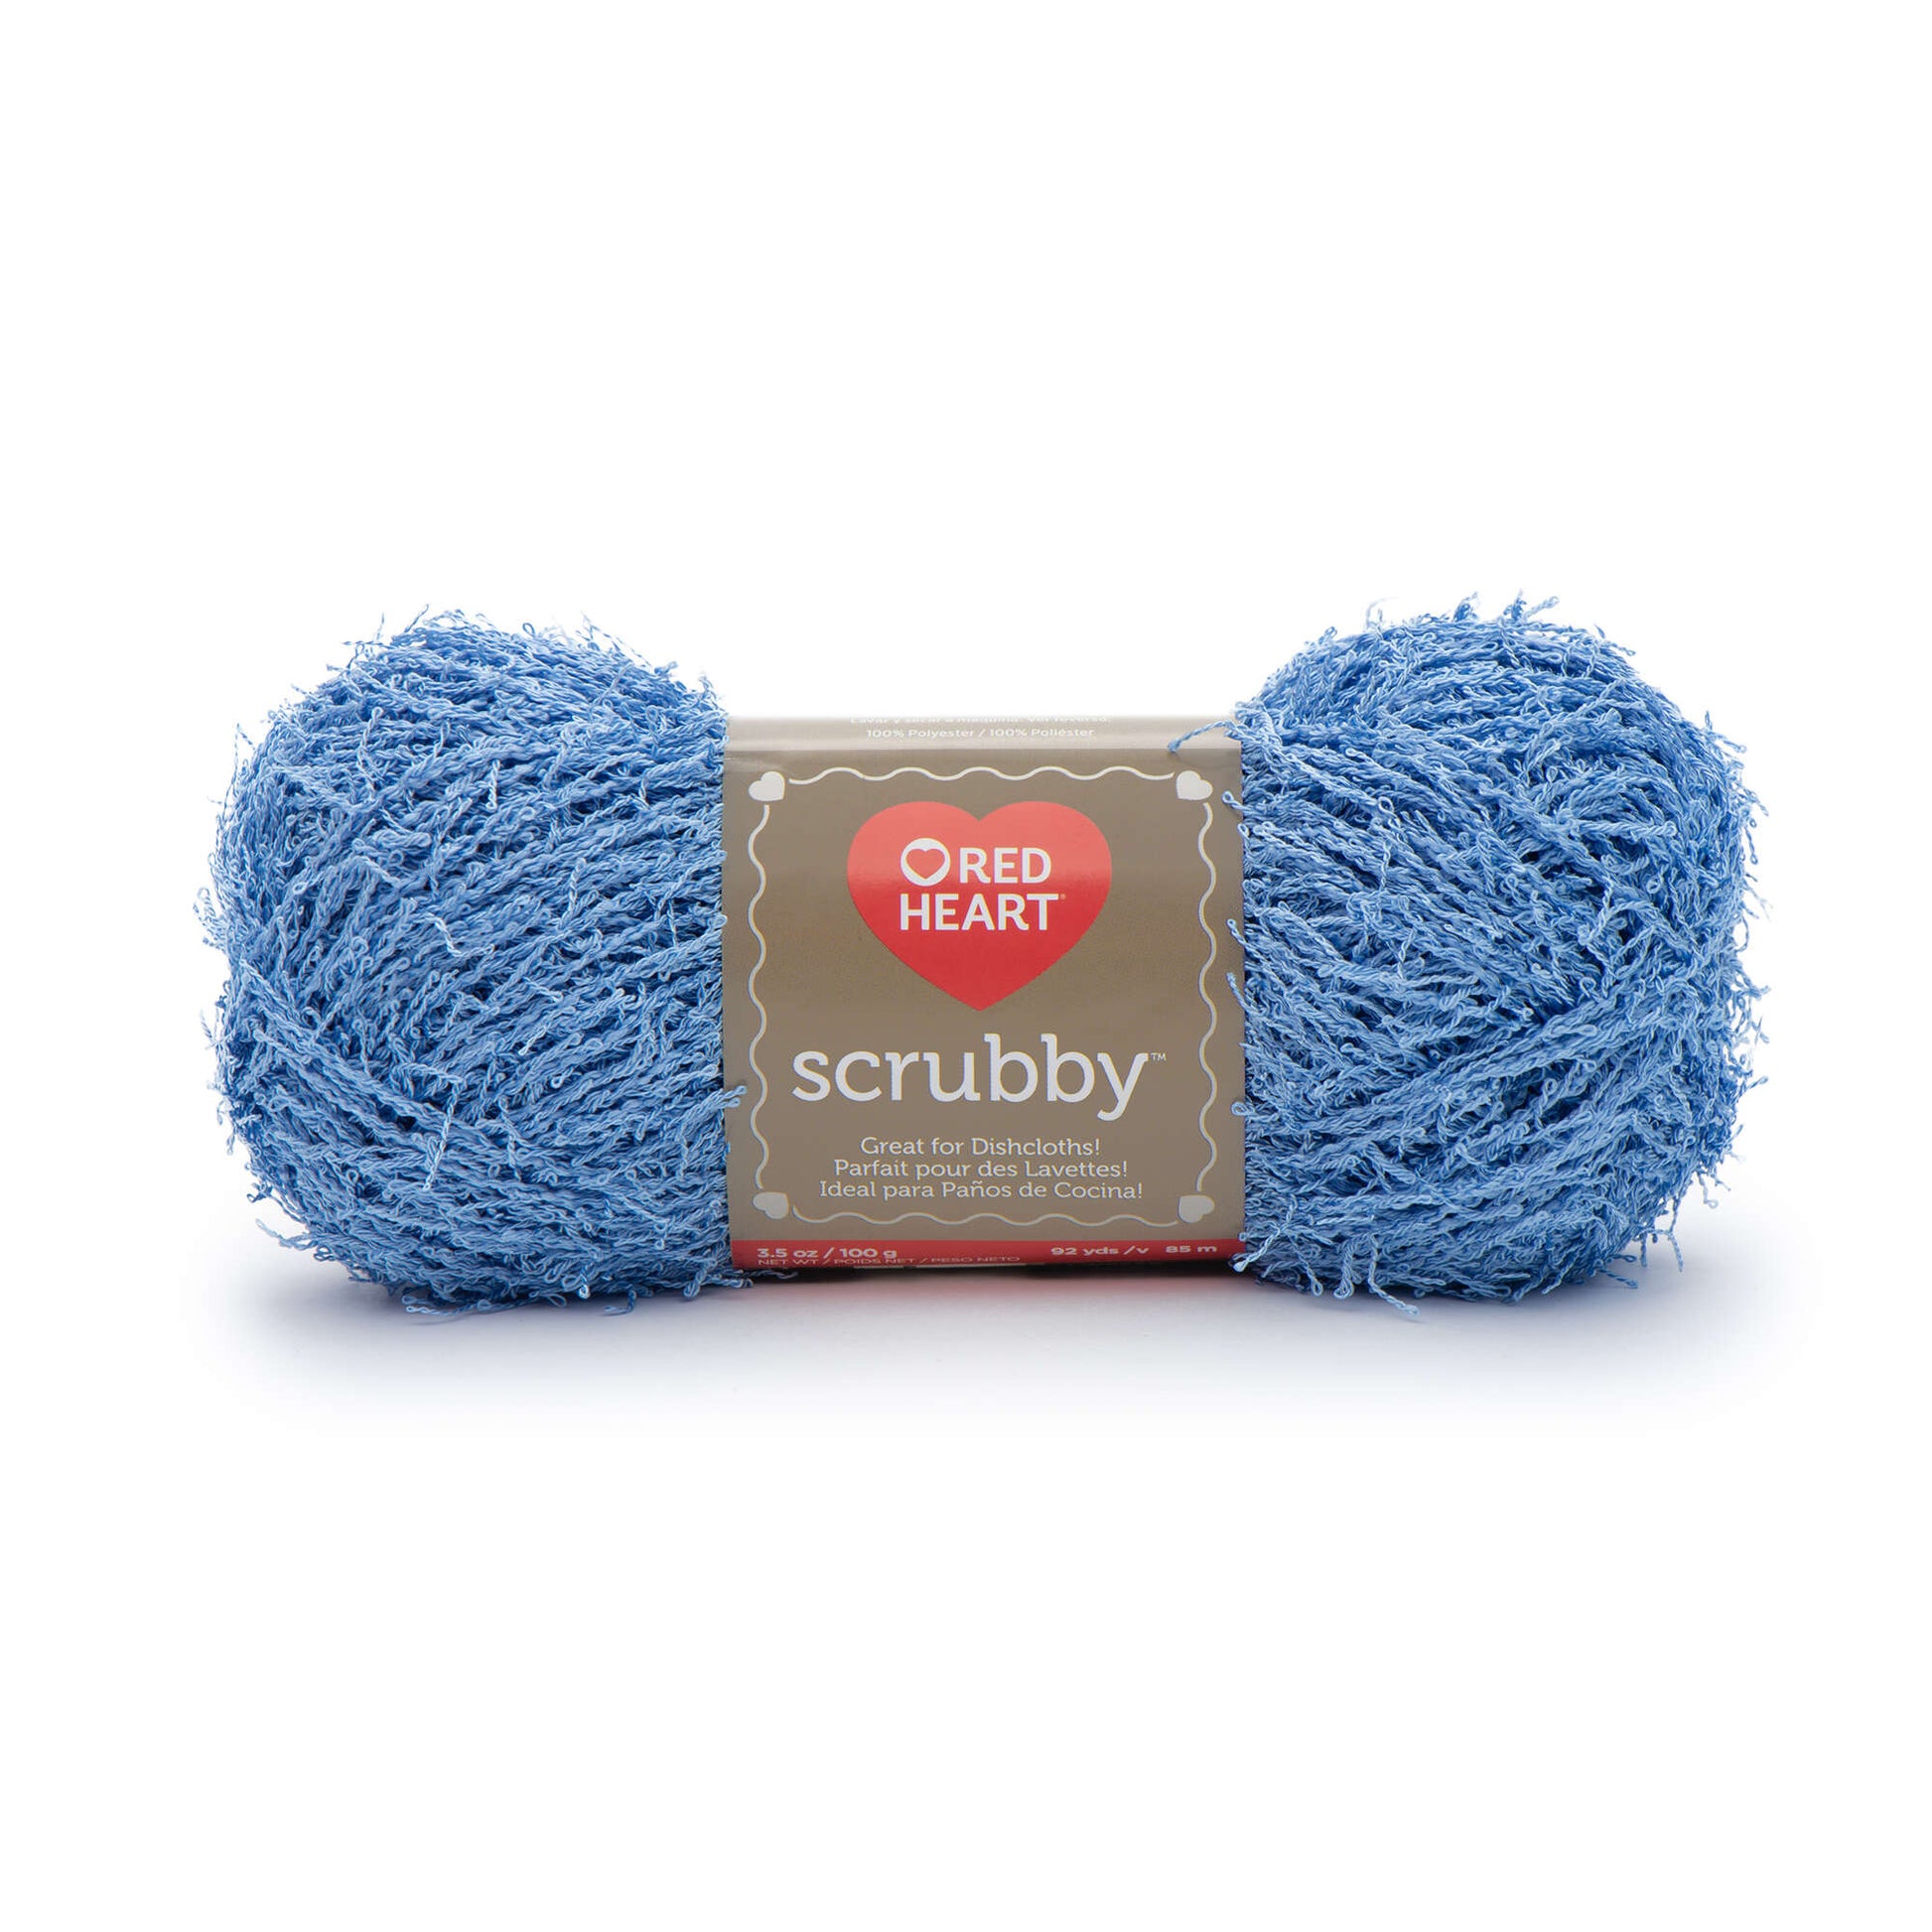 Red Heart Scrubby Cotton Yarn for Crochet or Knitting Dishcloths